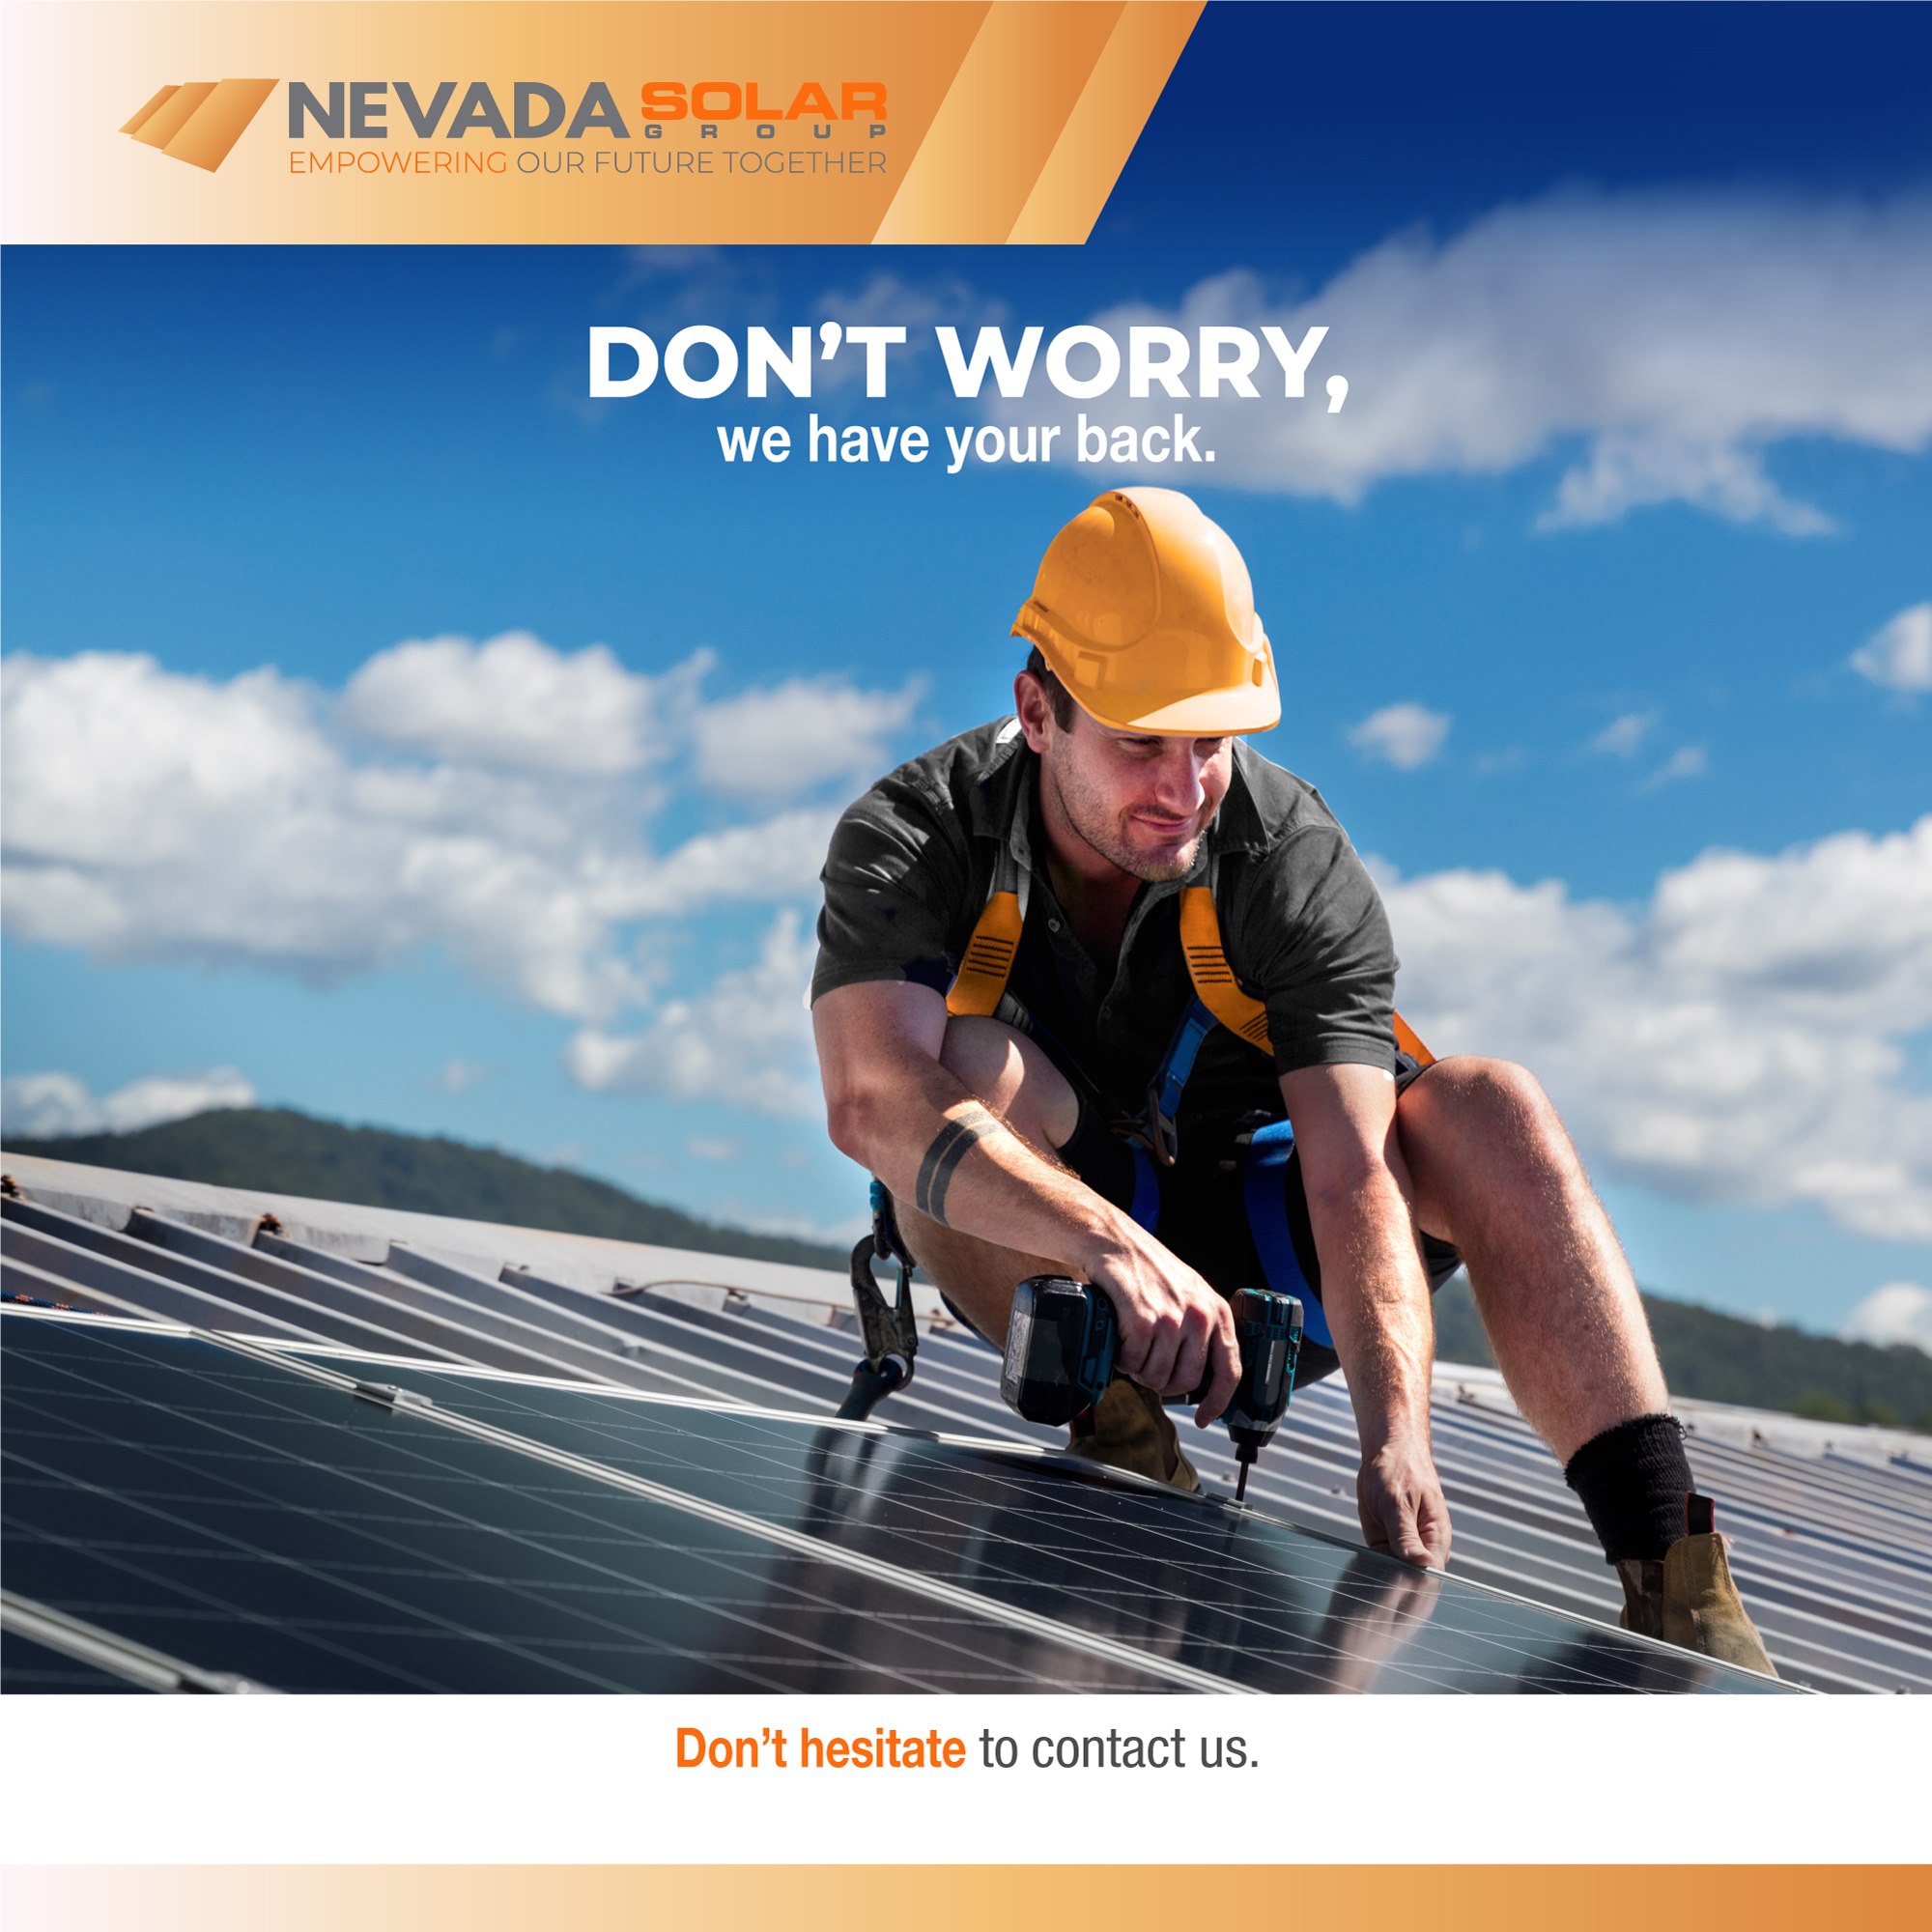 Nevada Solar Group supplied photo